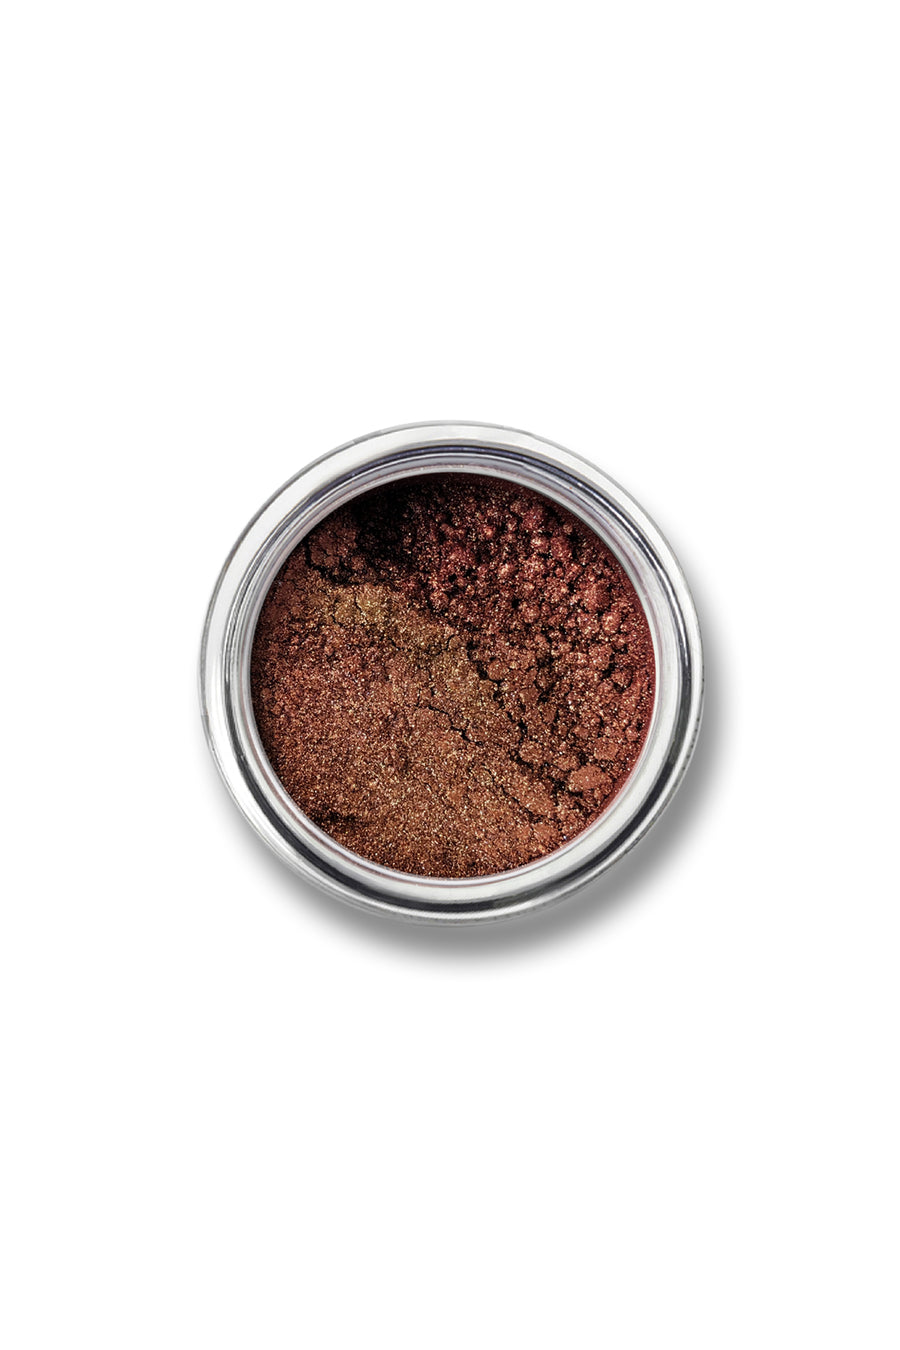 Shimmer Eyeshadow #26 - Greenish Brown - Blend Mineral Cosmetics